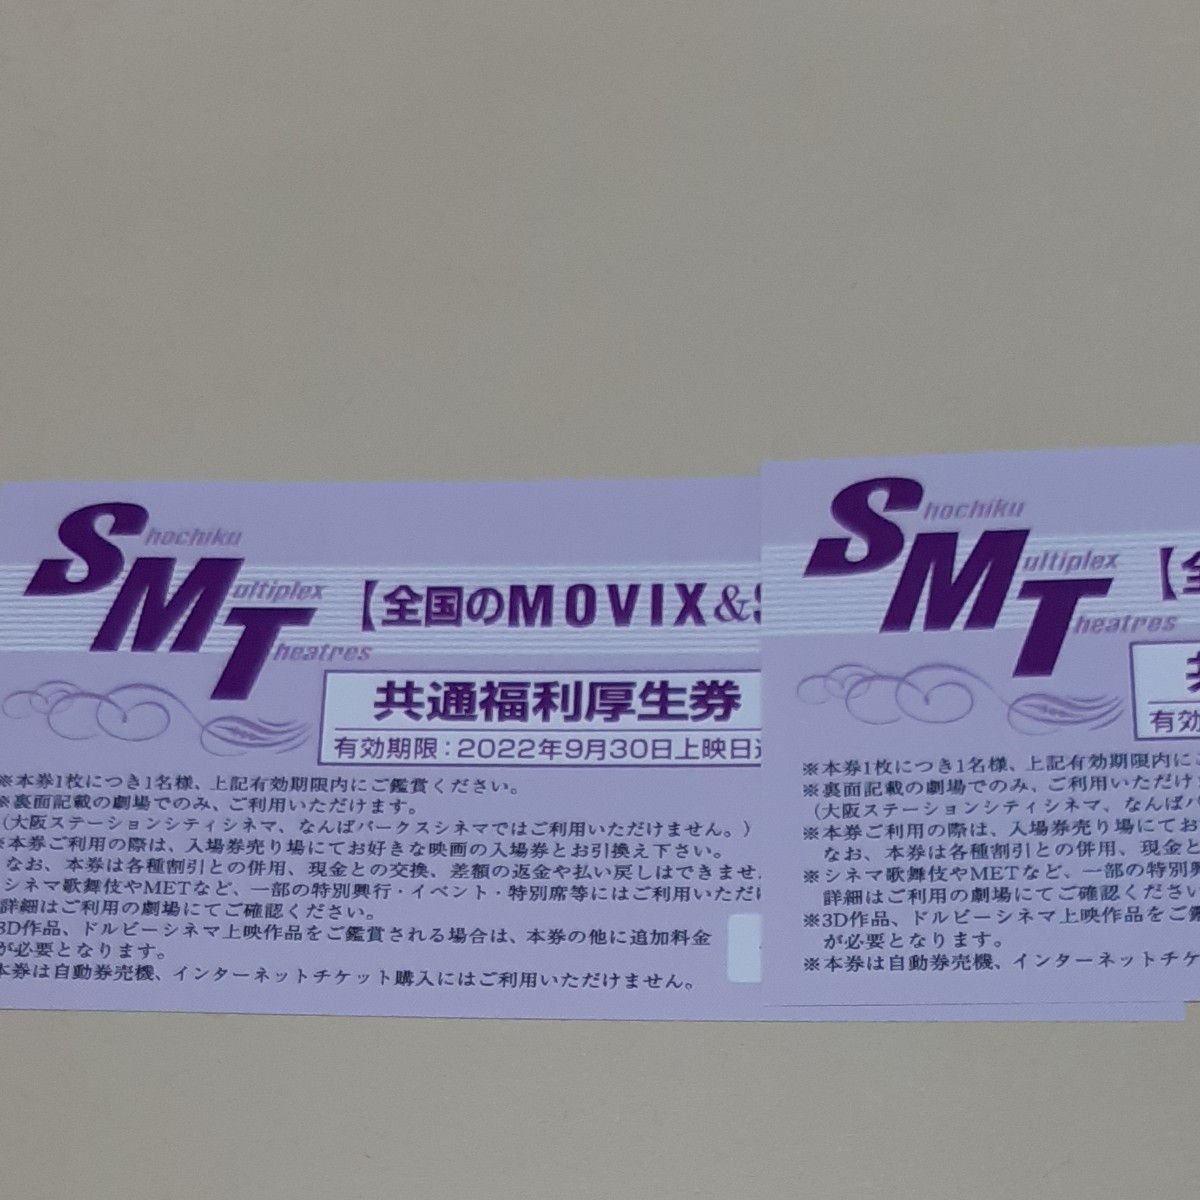 MOVIX SMT直営映画館チケット2枚 - その他